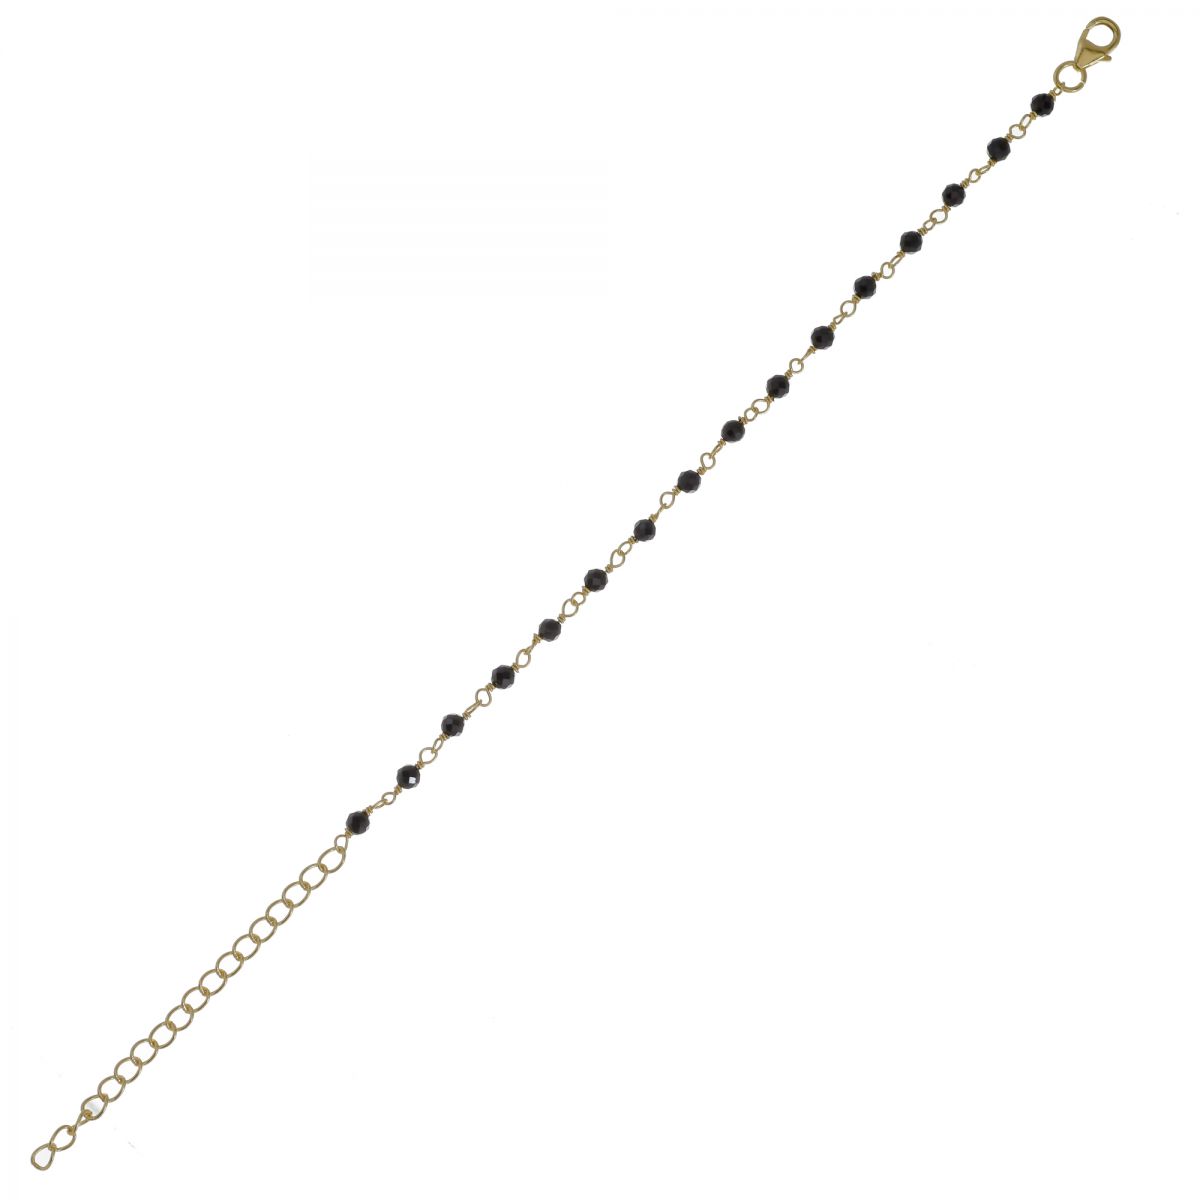 ff bracelet 3mm black agate beaded gold plated